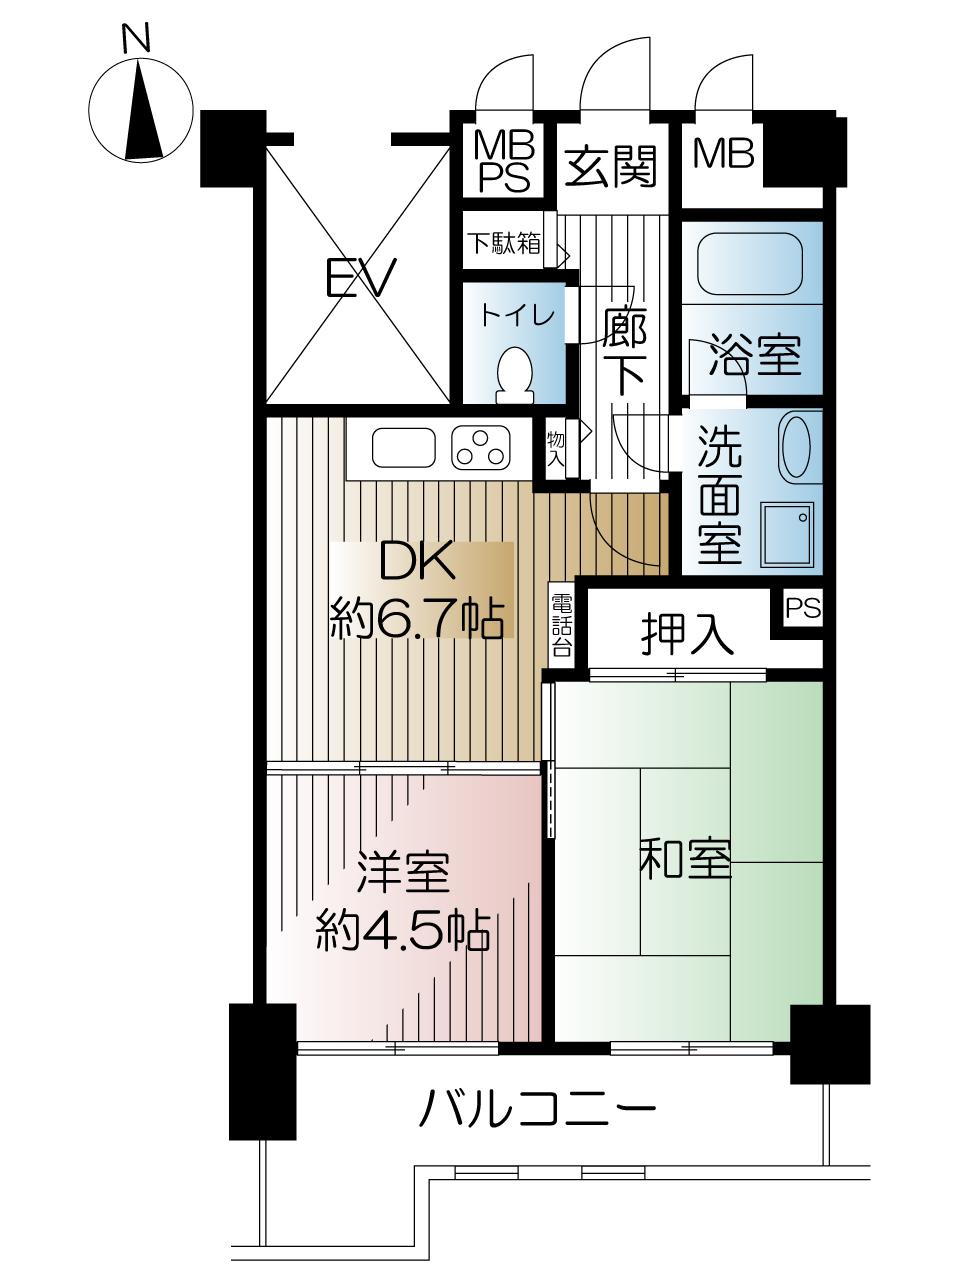 Floor plan. 2DK, Price 14.8 million yen, Occupied area 42.22 sq m , Balcony area 7.68 sq m